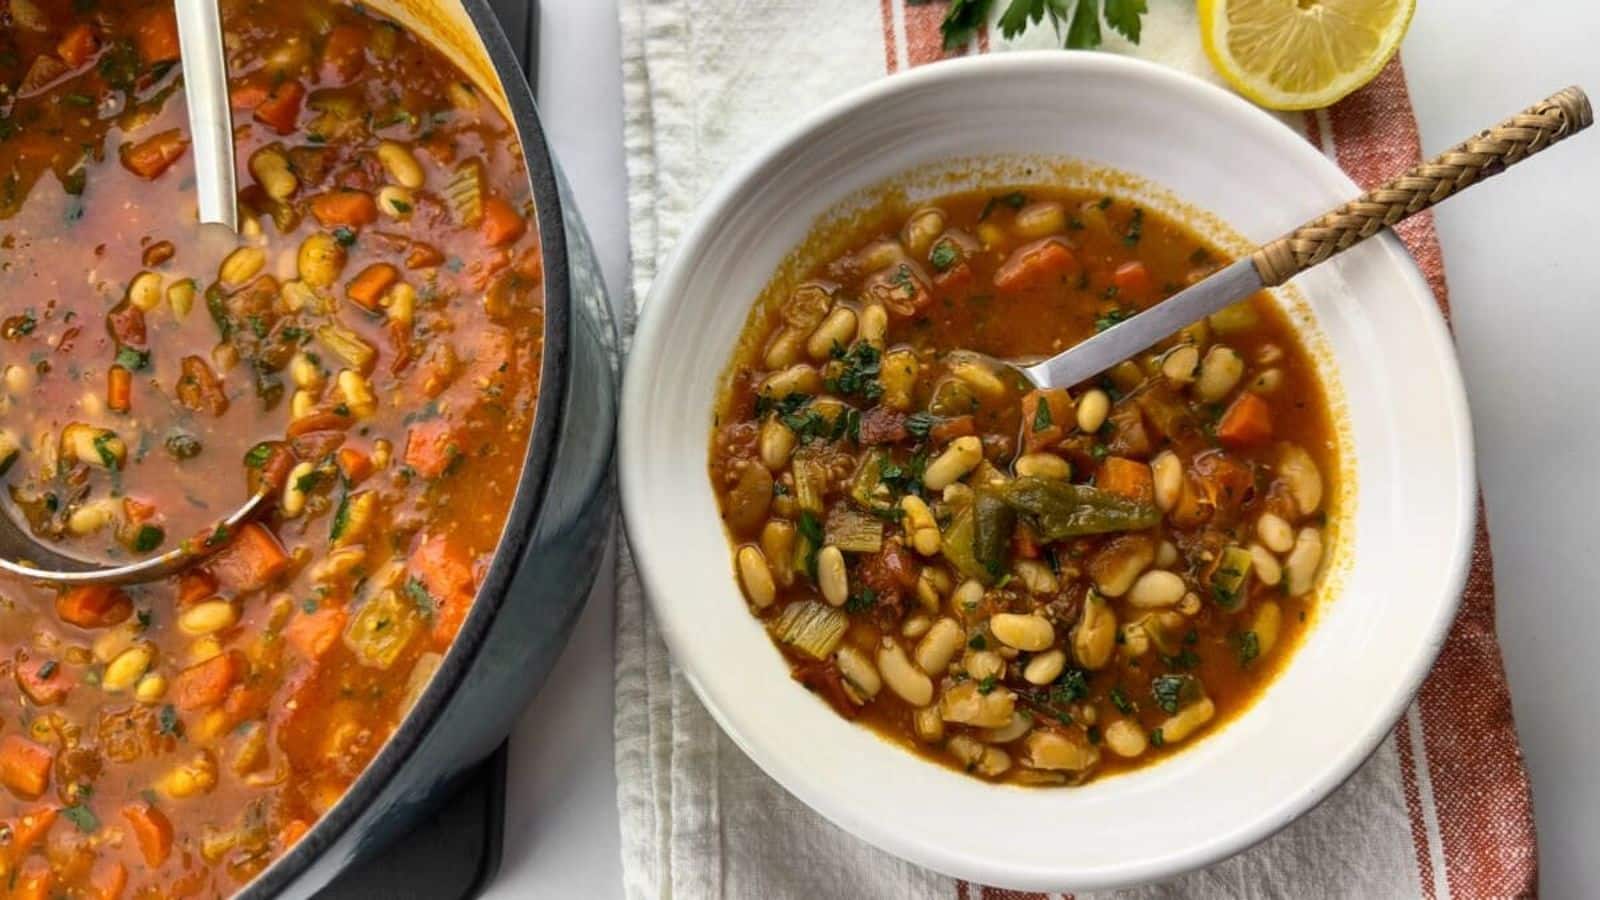 Try this classic Greek fasolada soup recipe